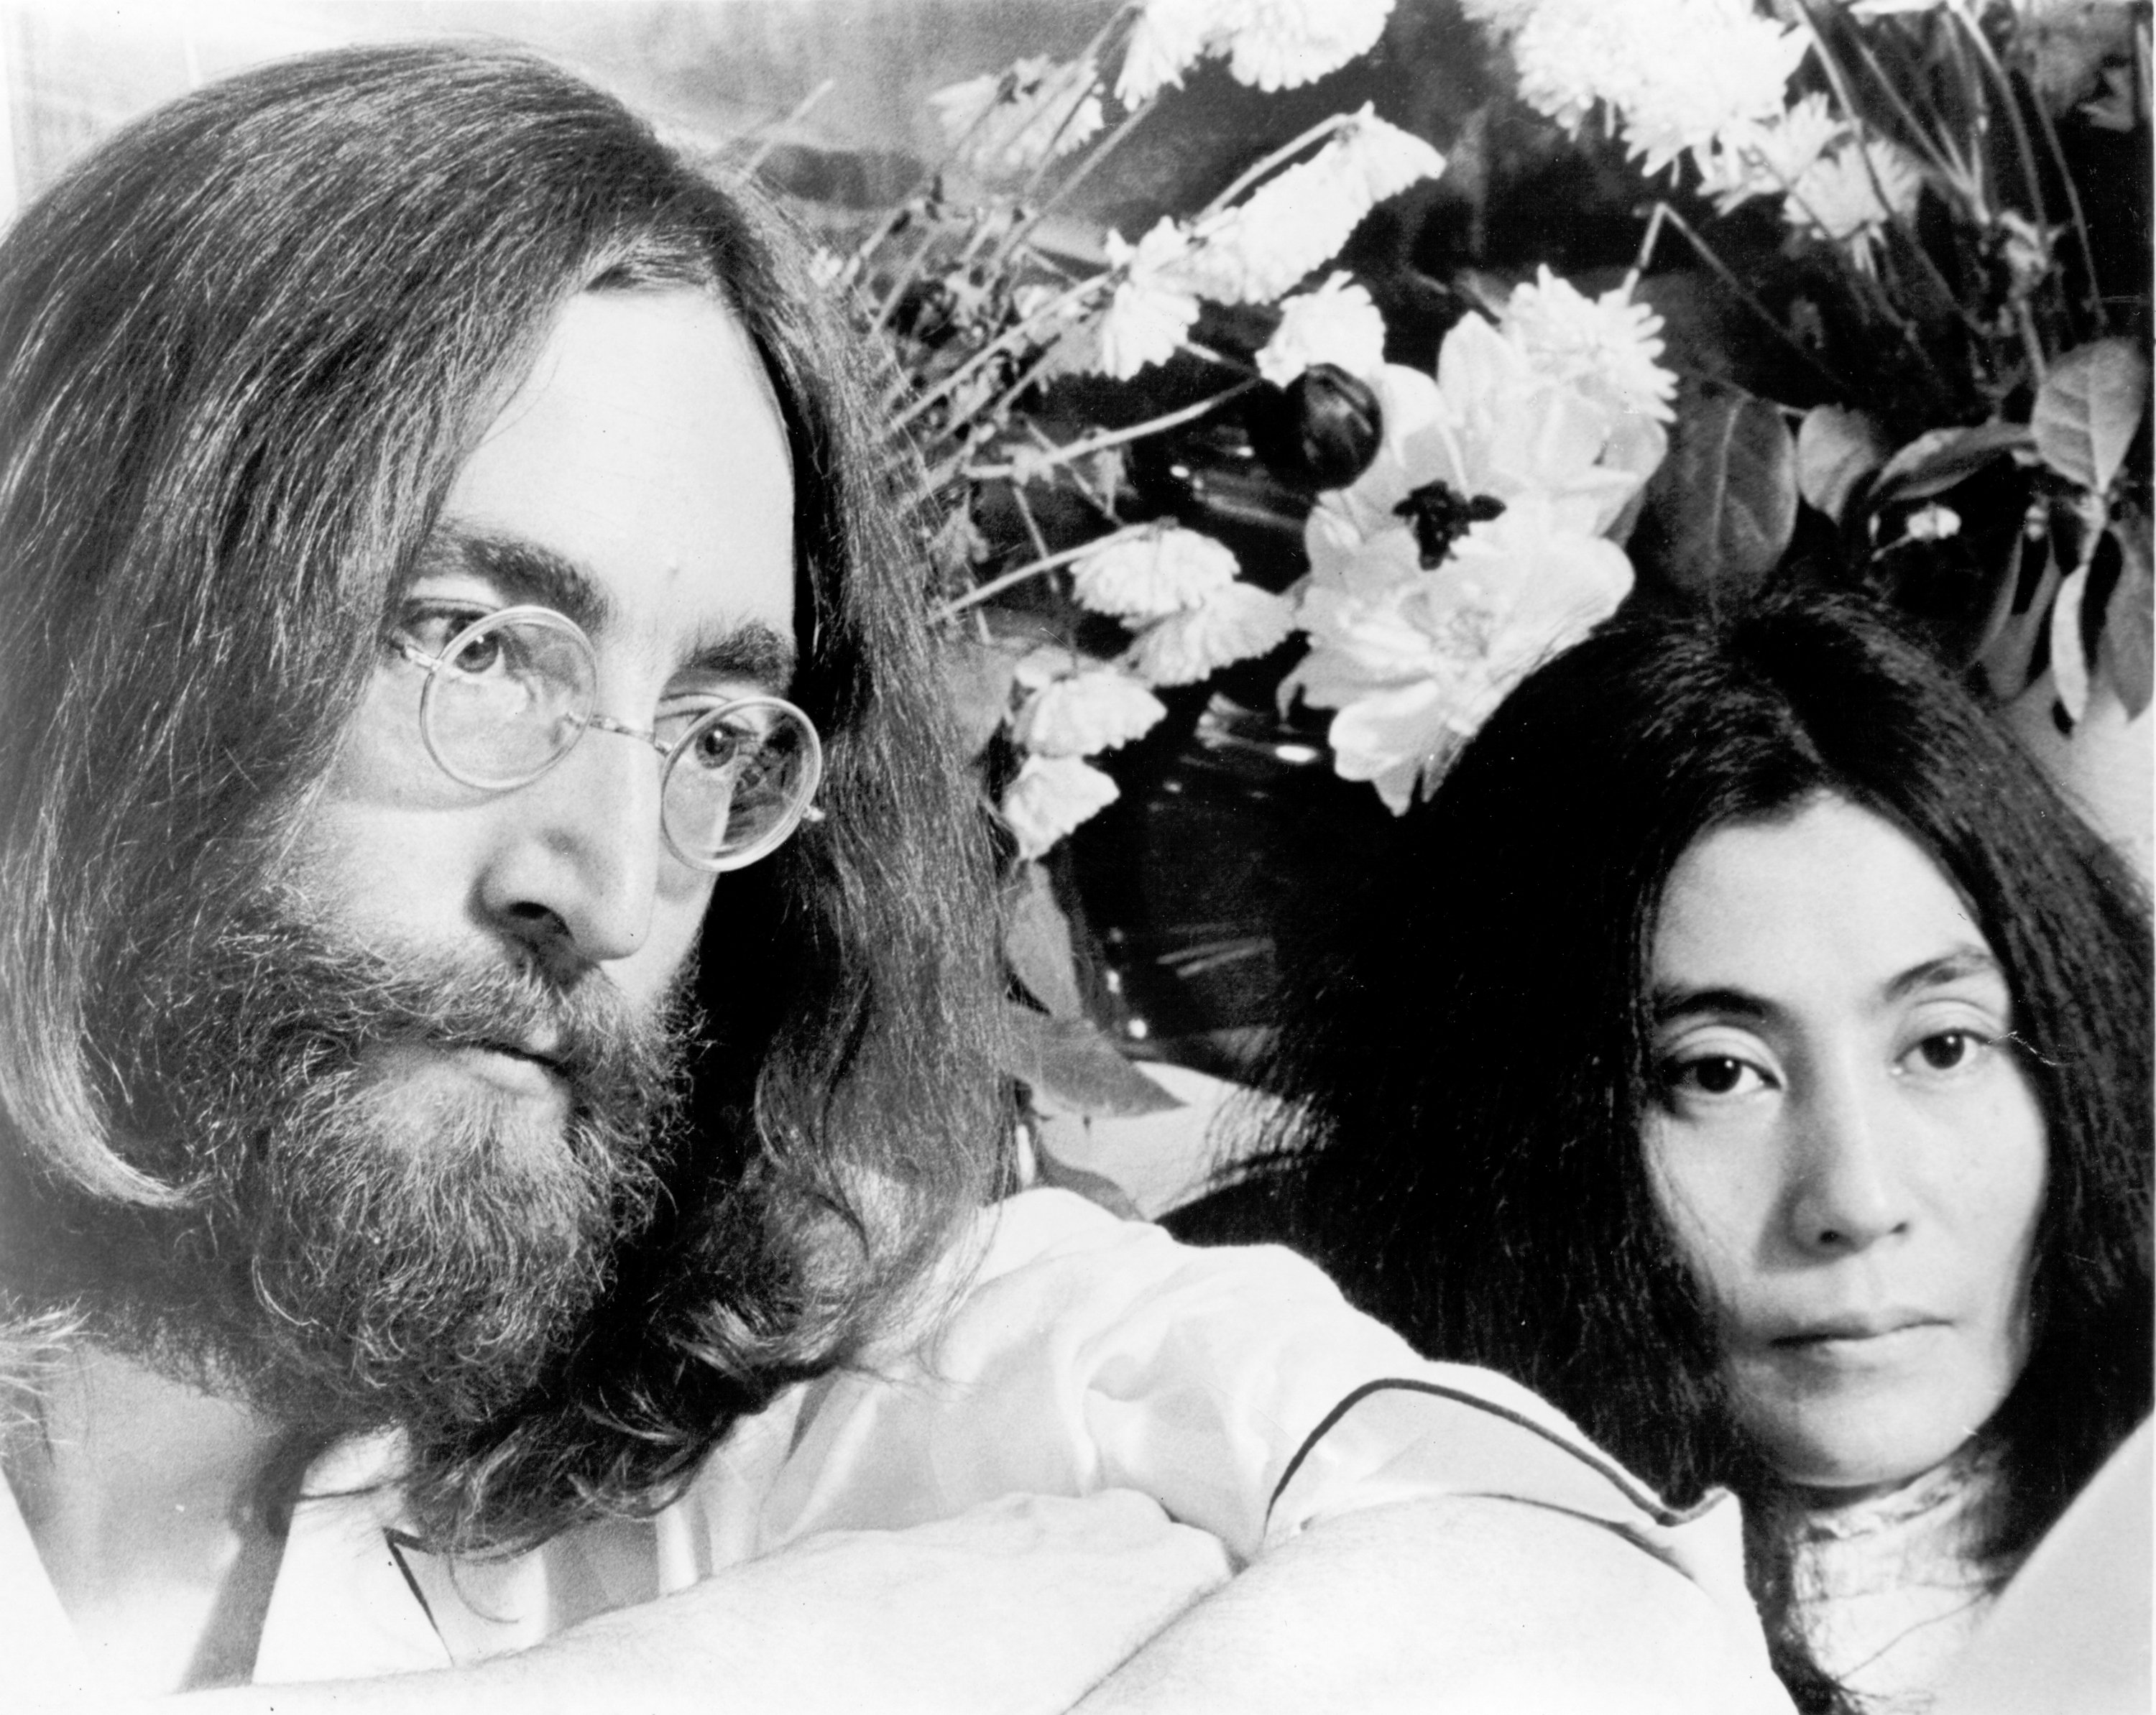 John Lennon and Yoko Ono with flowers